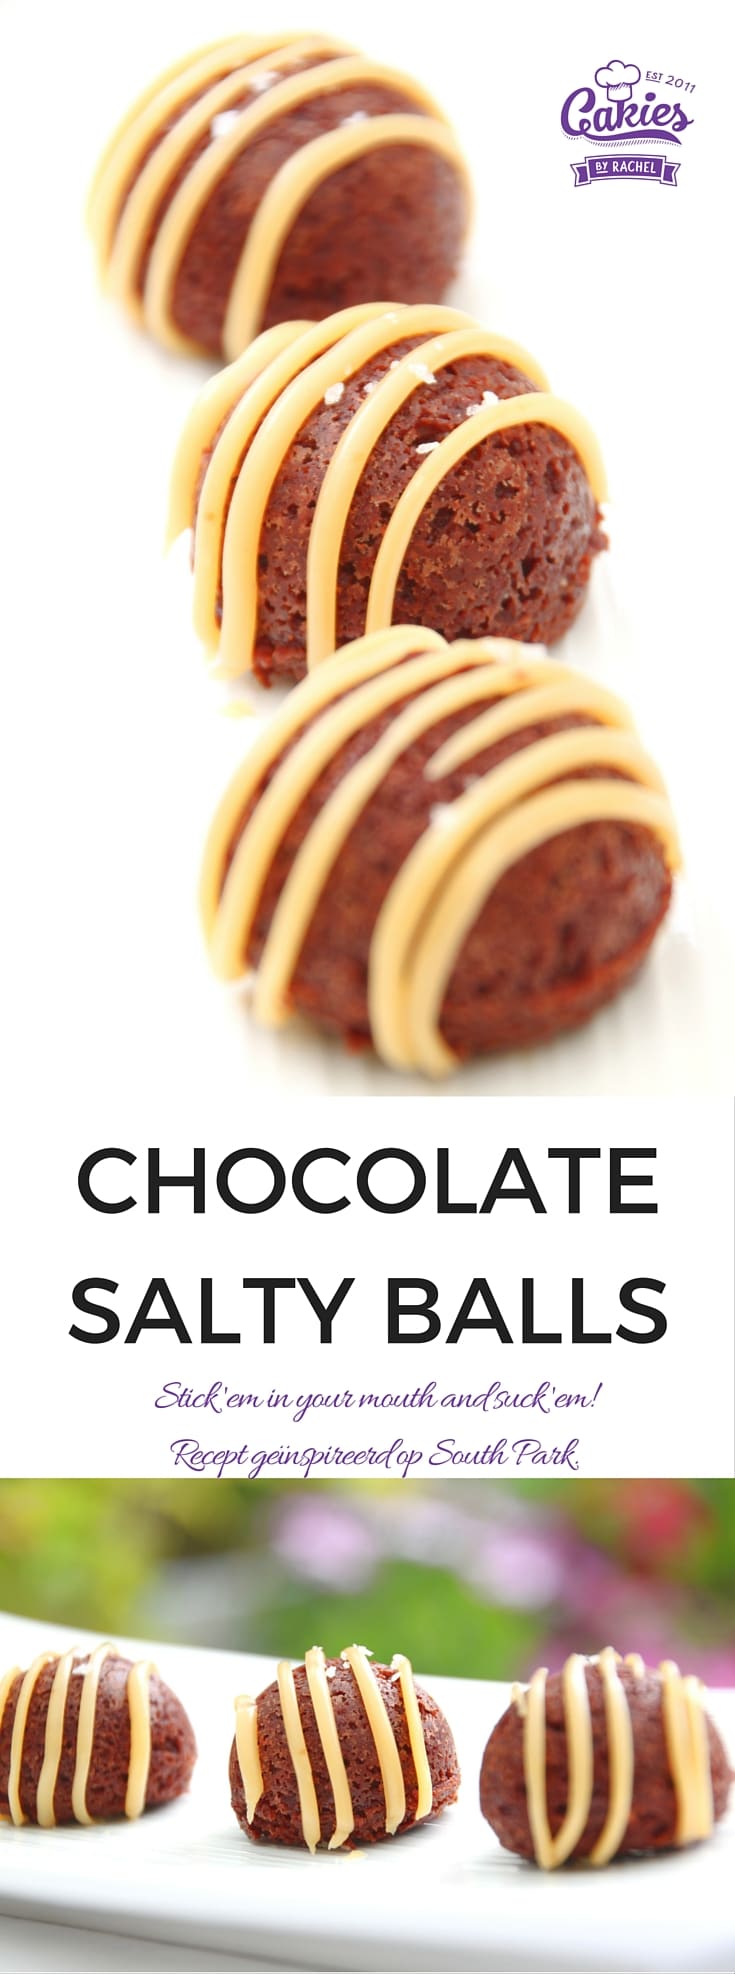 Chocolate Salty Balls Recept